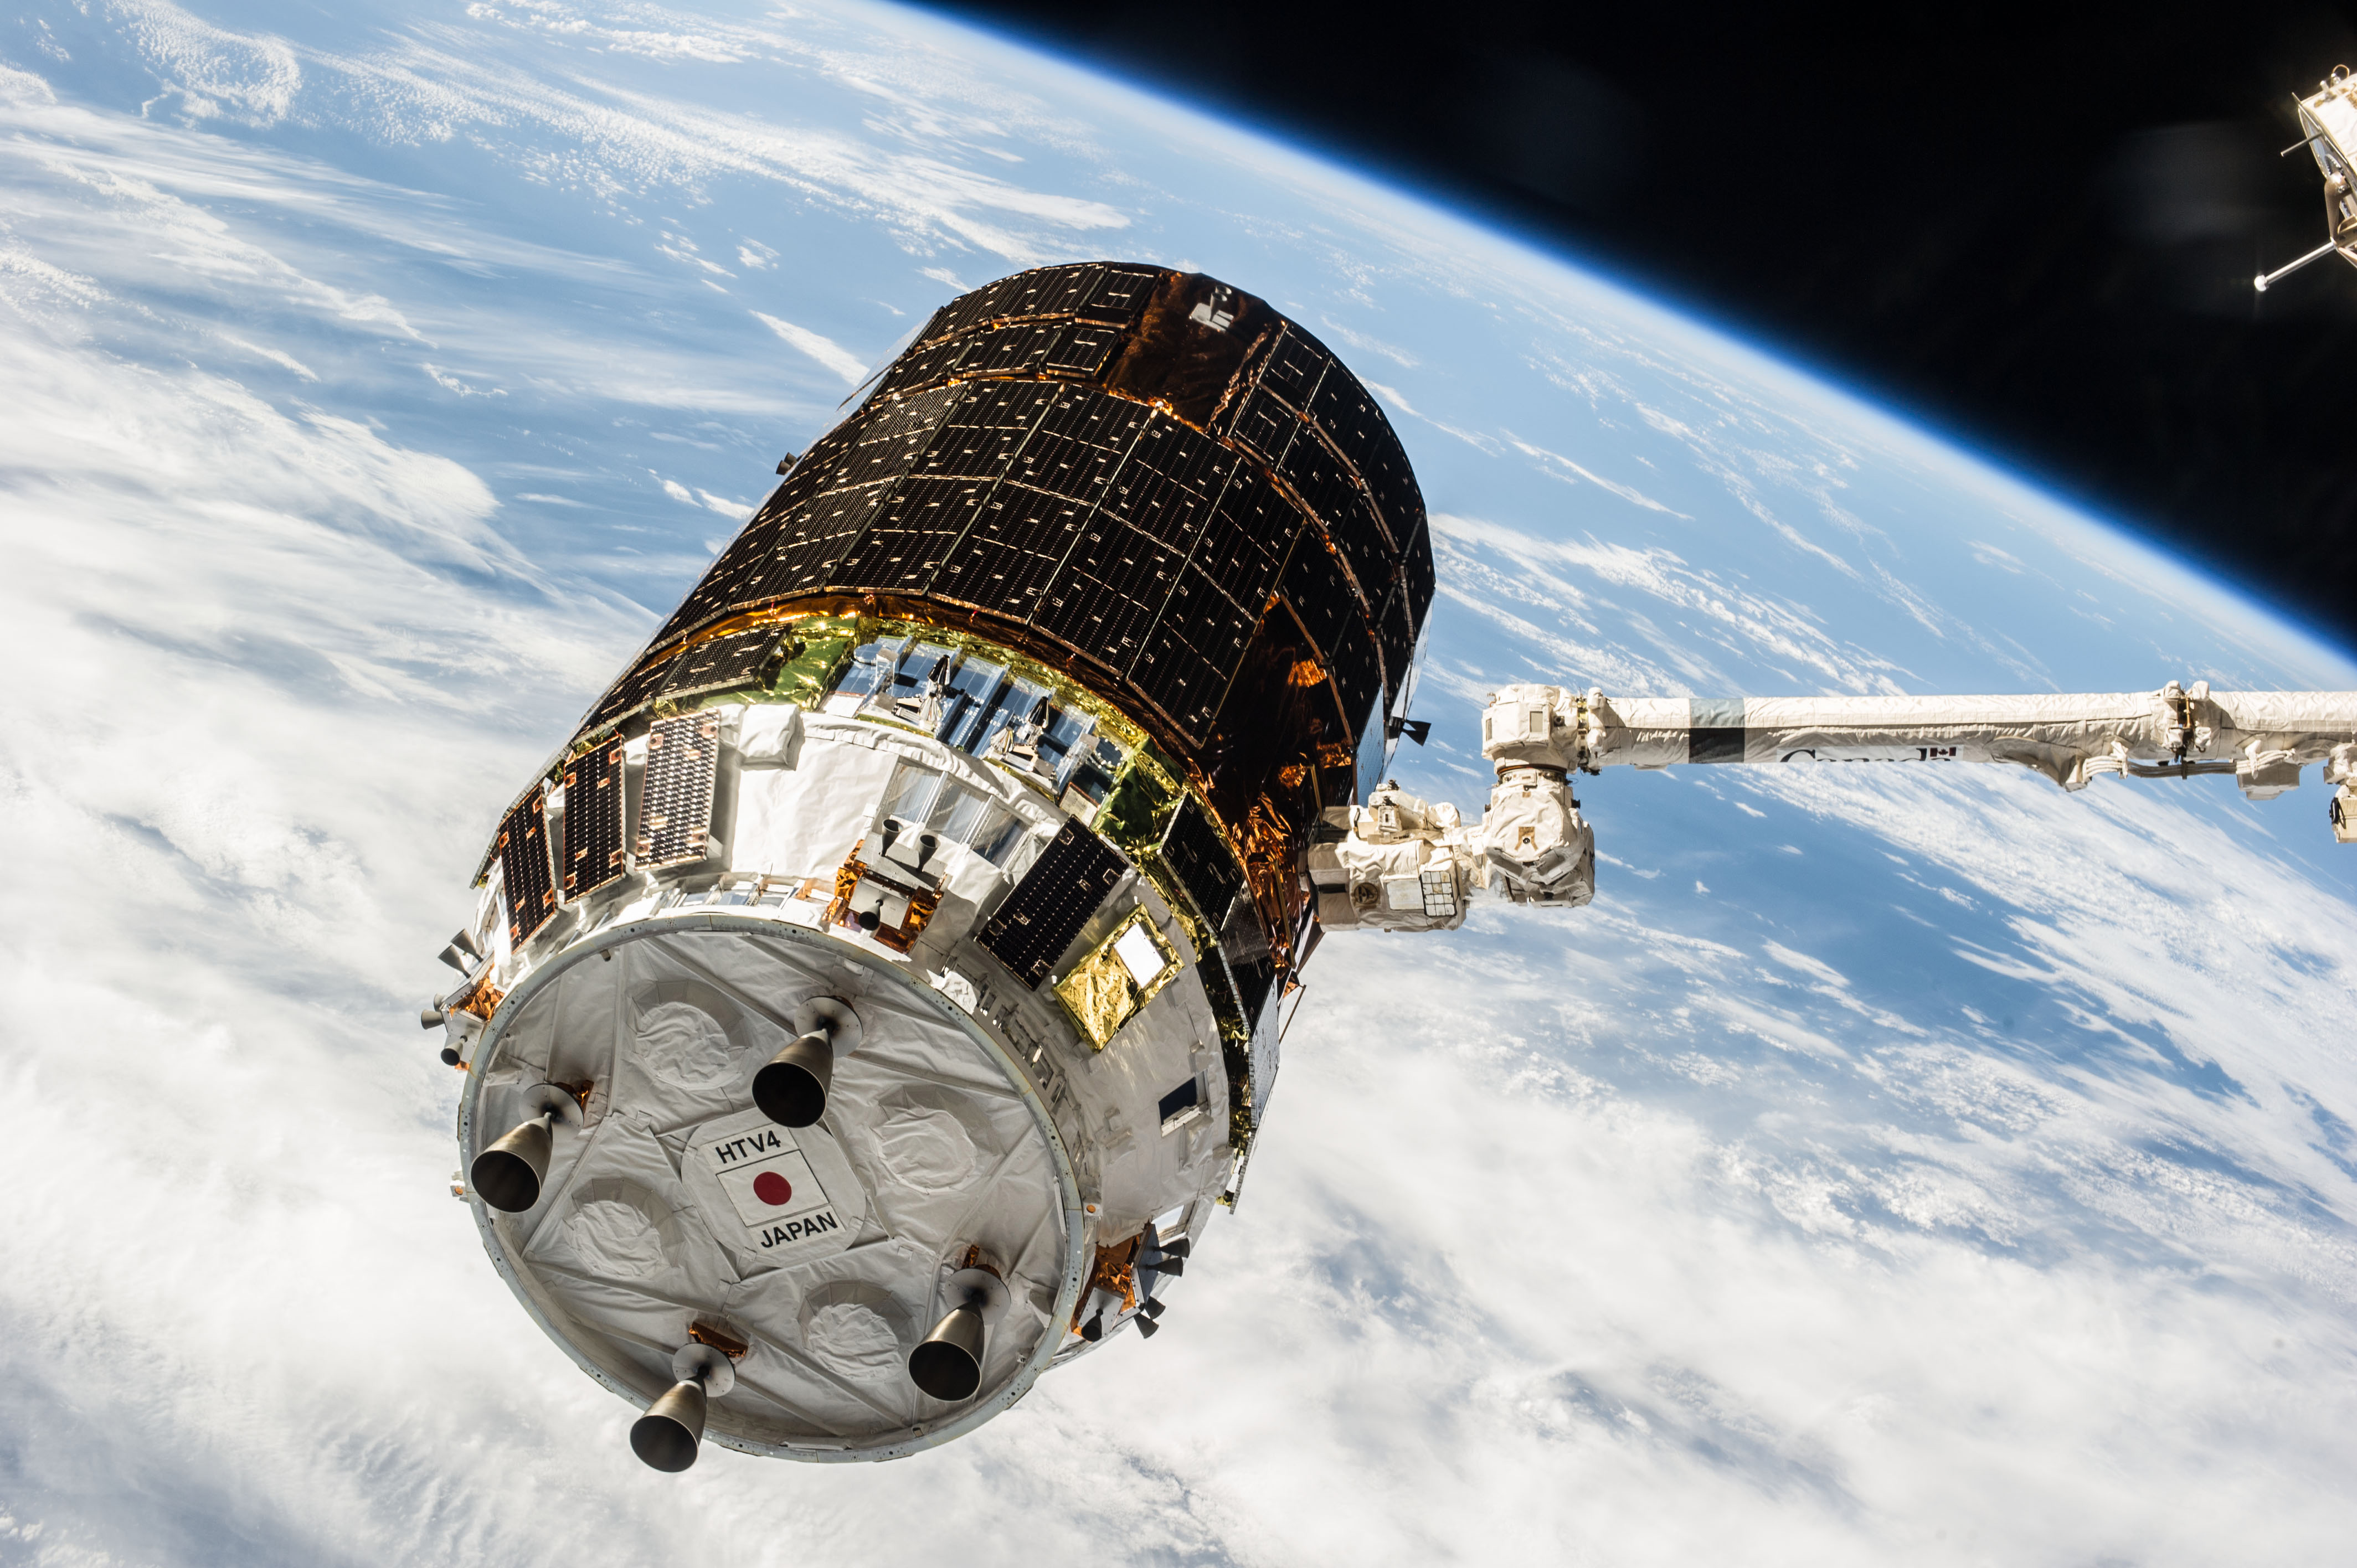 H-II Transfer Vehicle KOUNOTORI (HTV) - International Space Station - JAXA